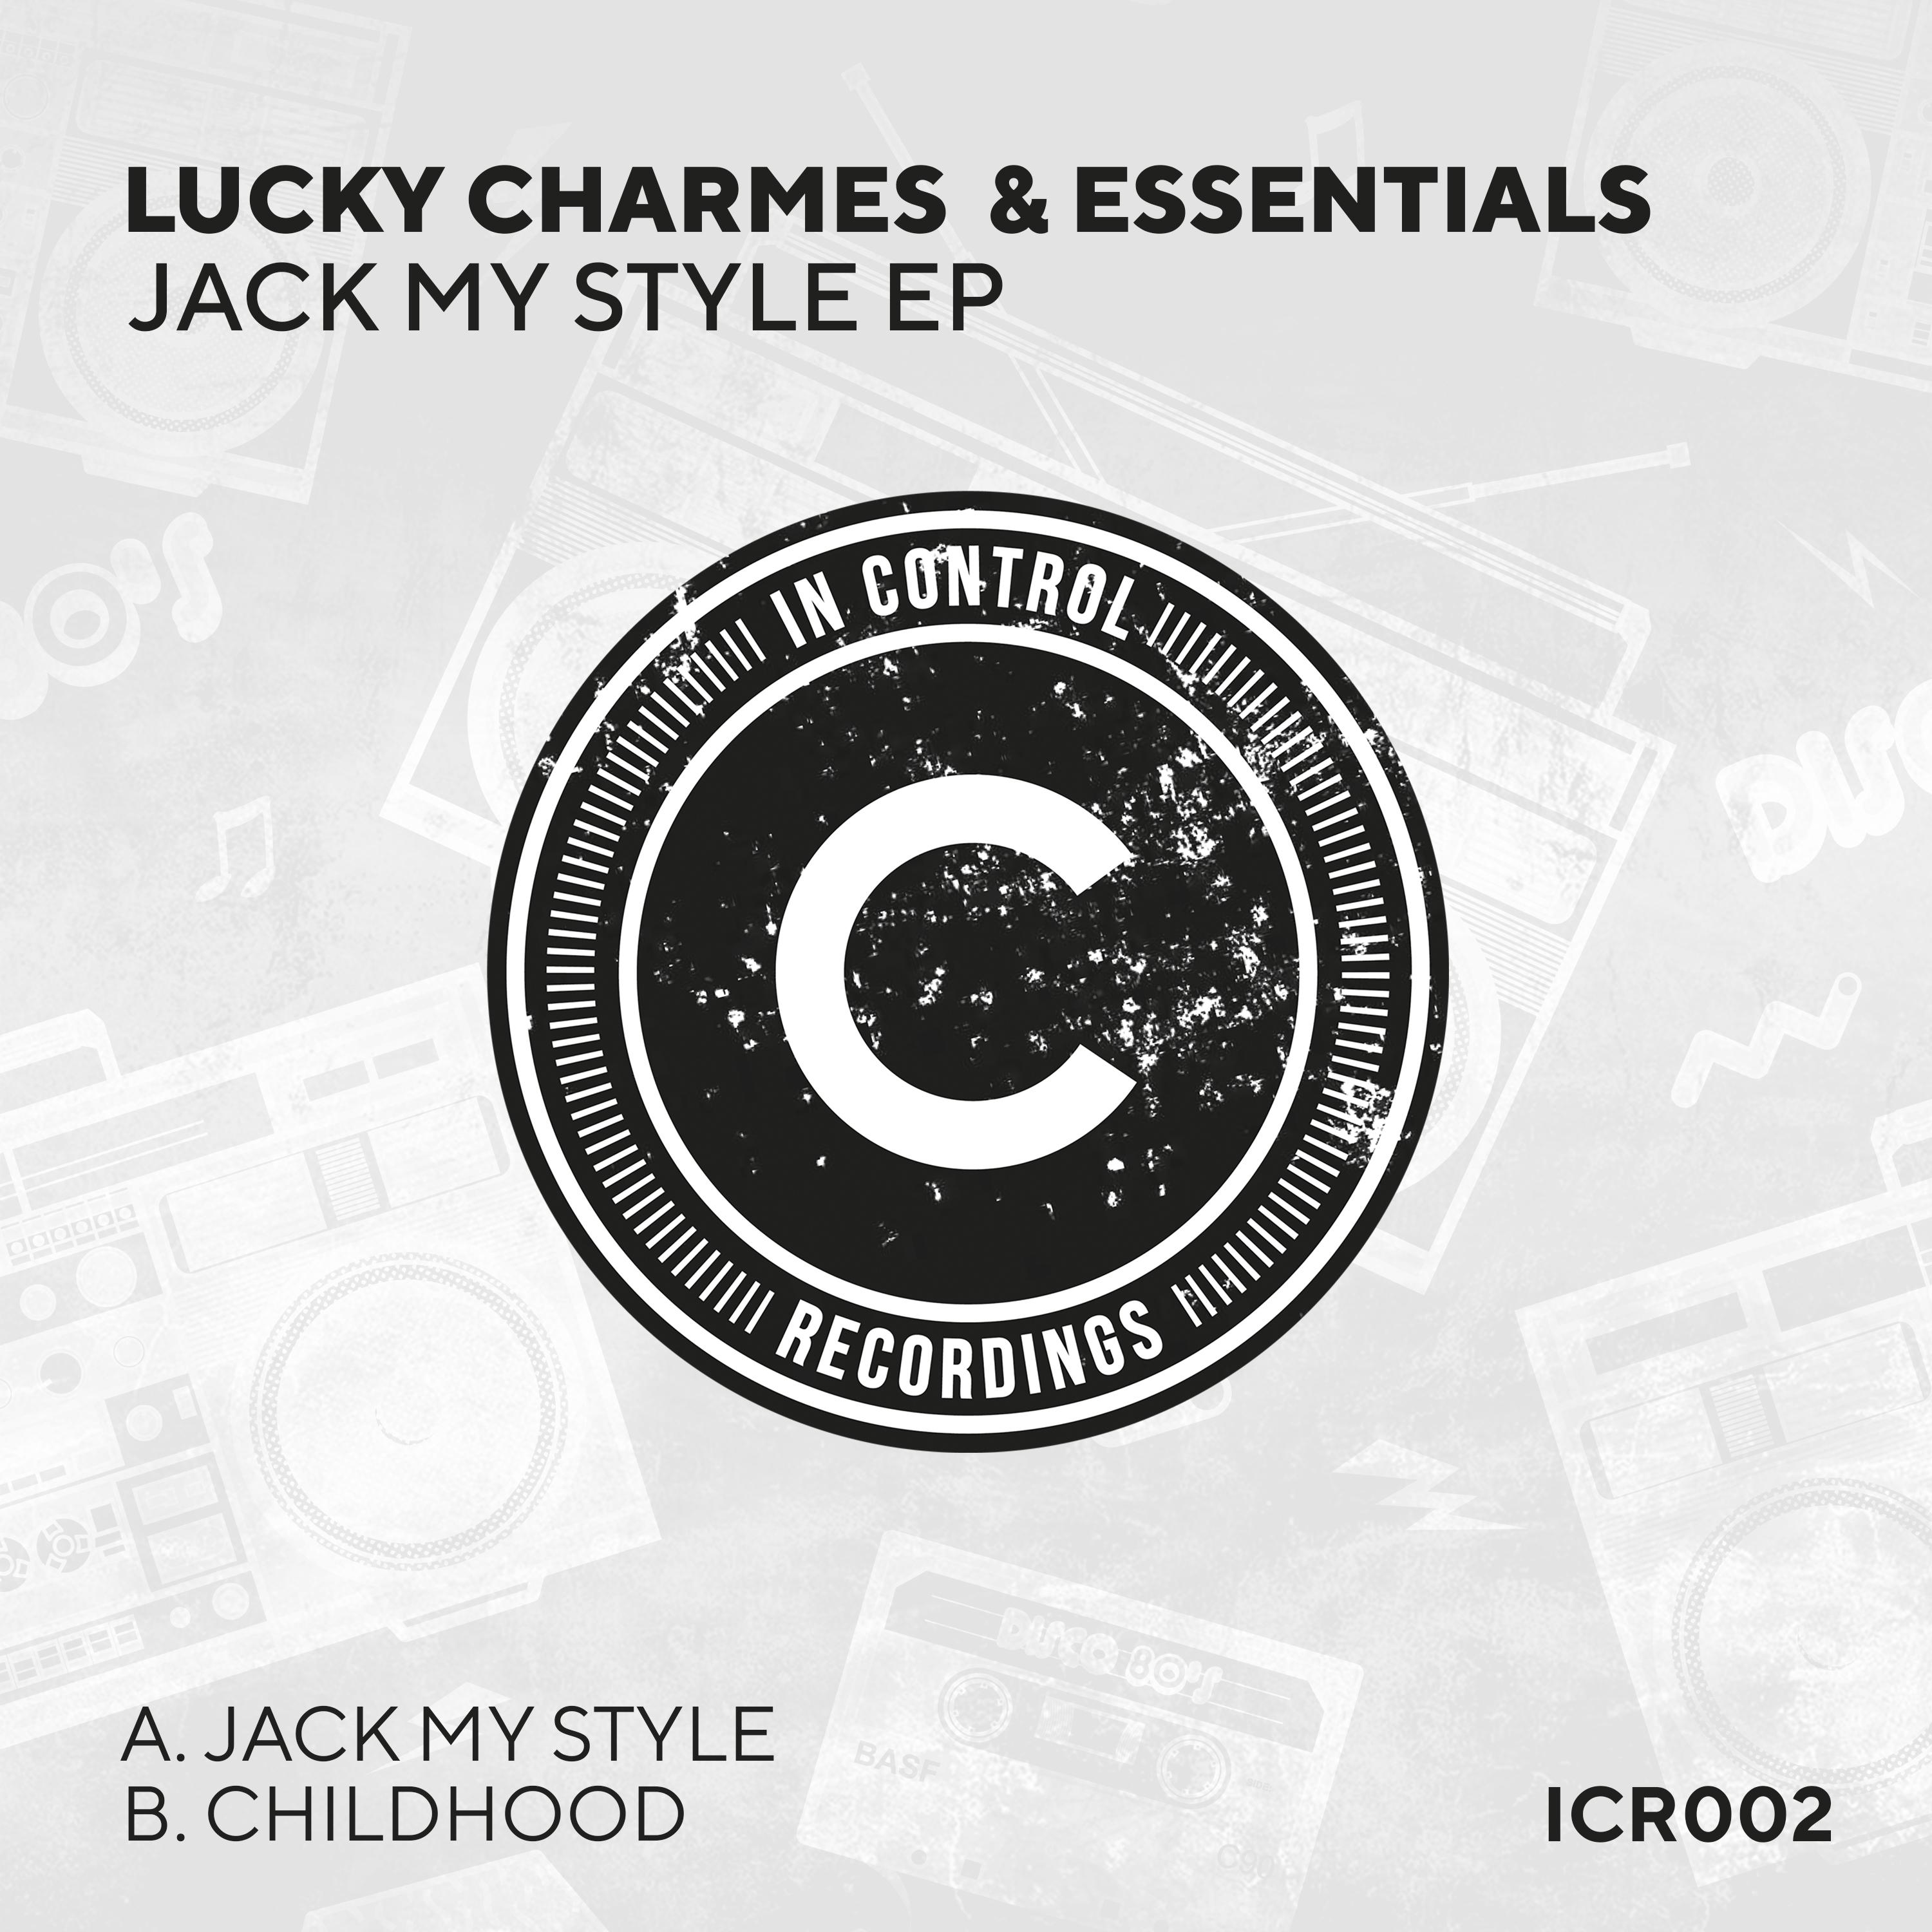 Jack My Style EP